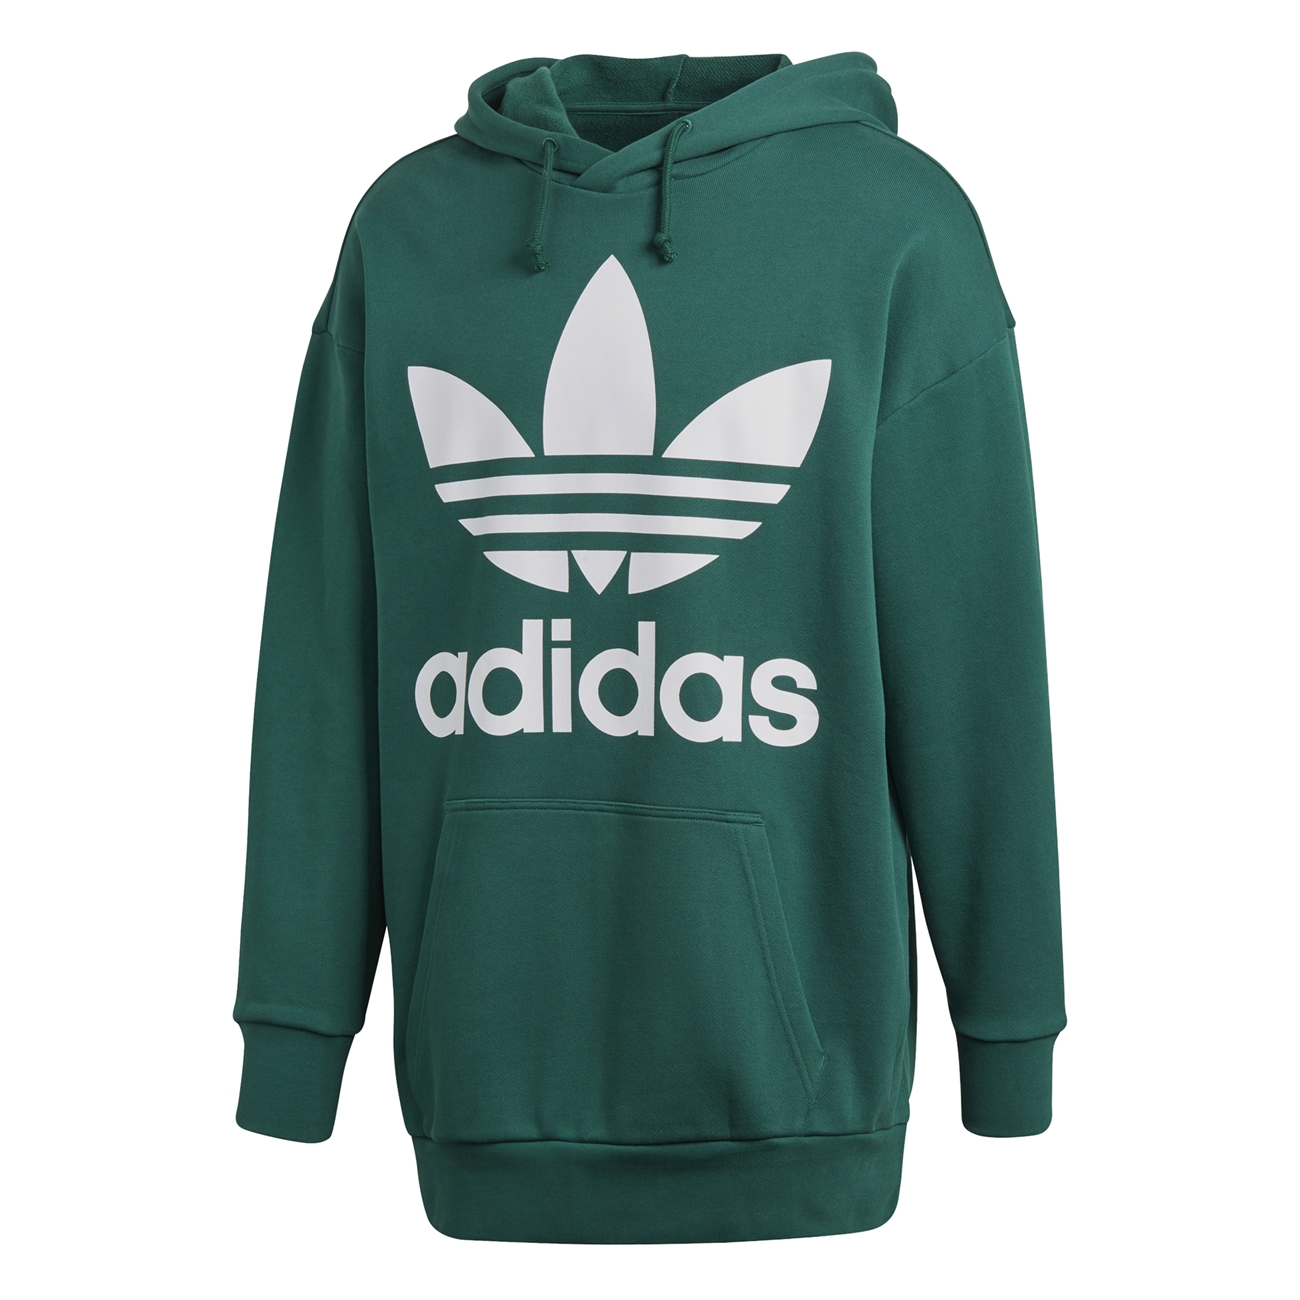 Adidas Originals Trefoil Oversized Hoodie (Collegiate Green)